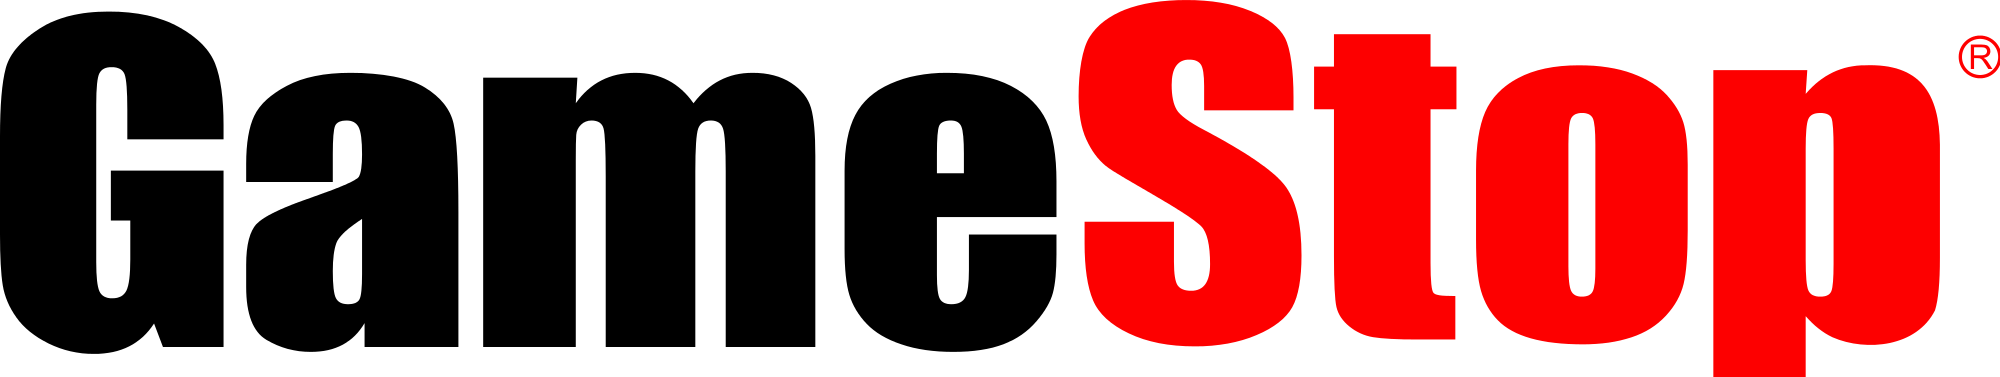 Gamestop Logo PNG Image